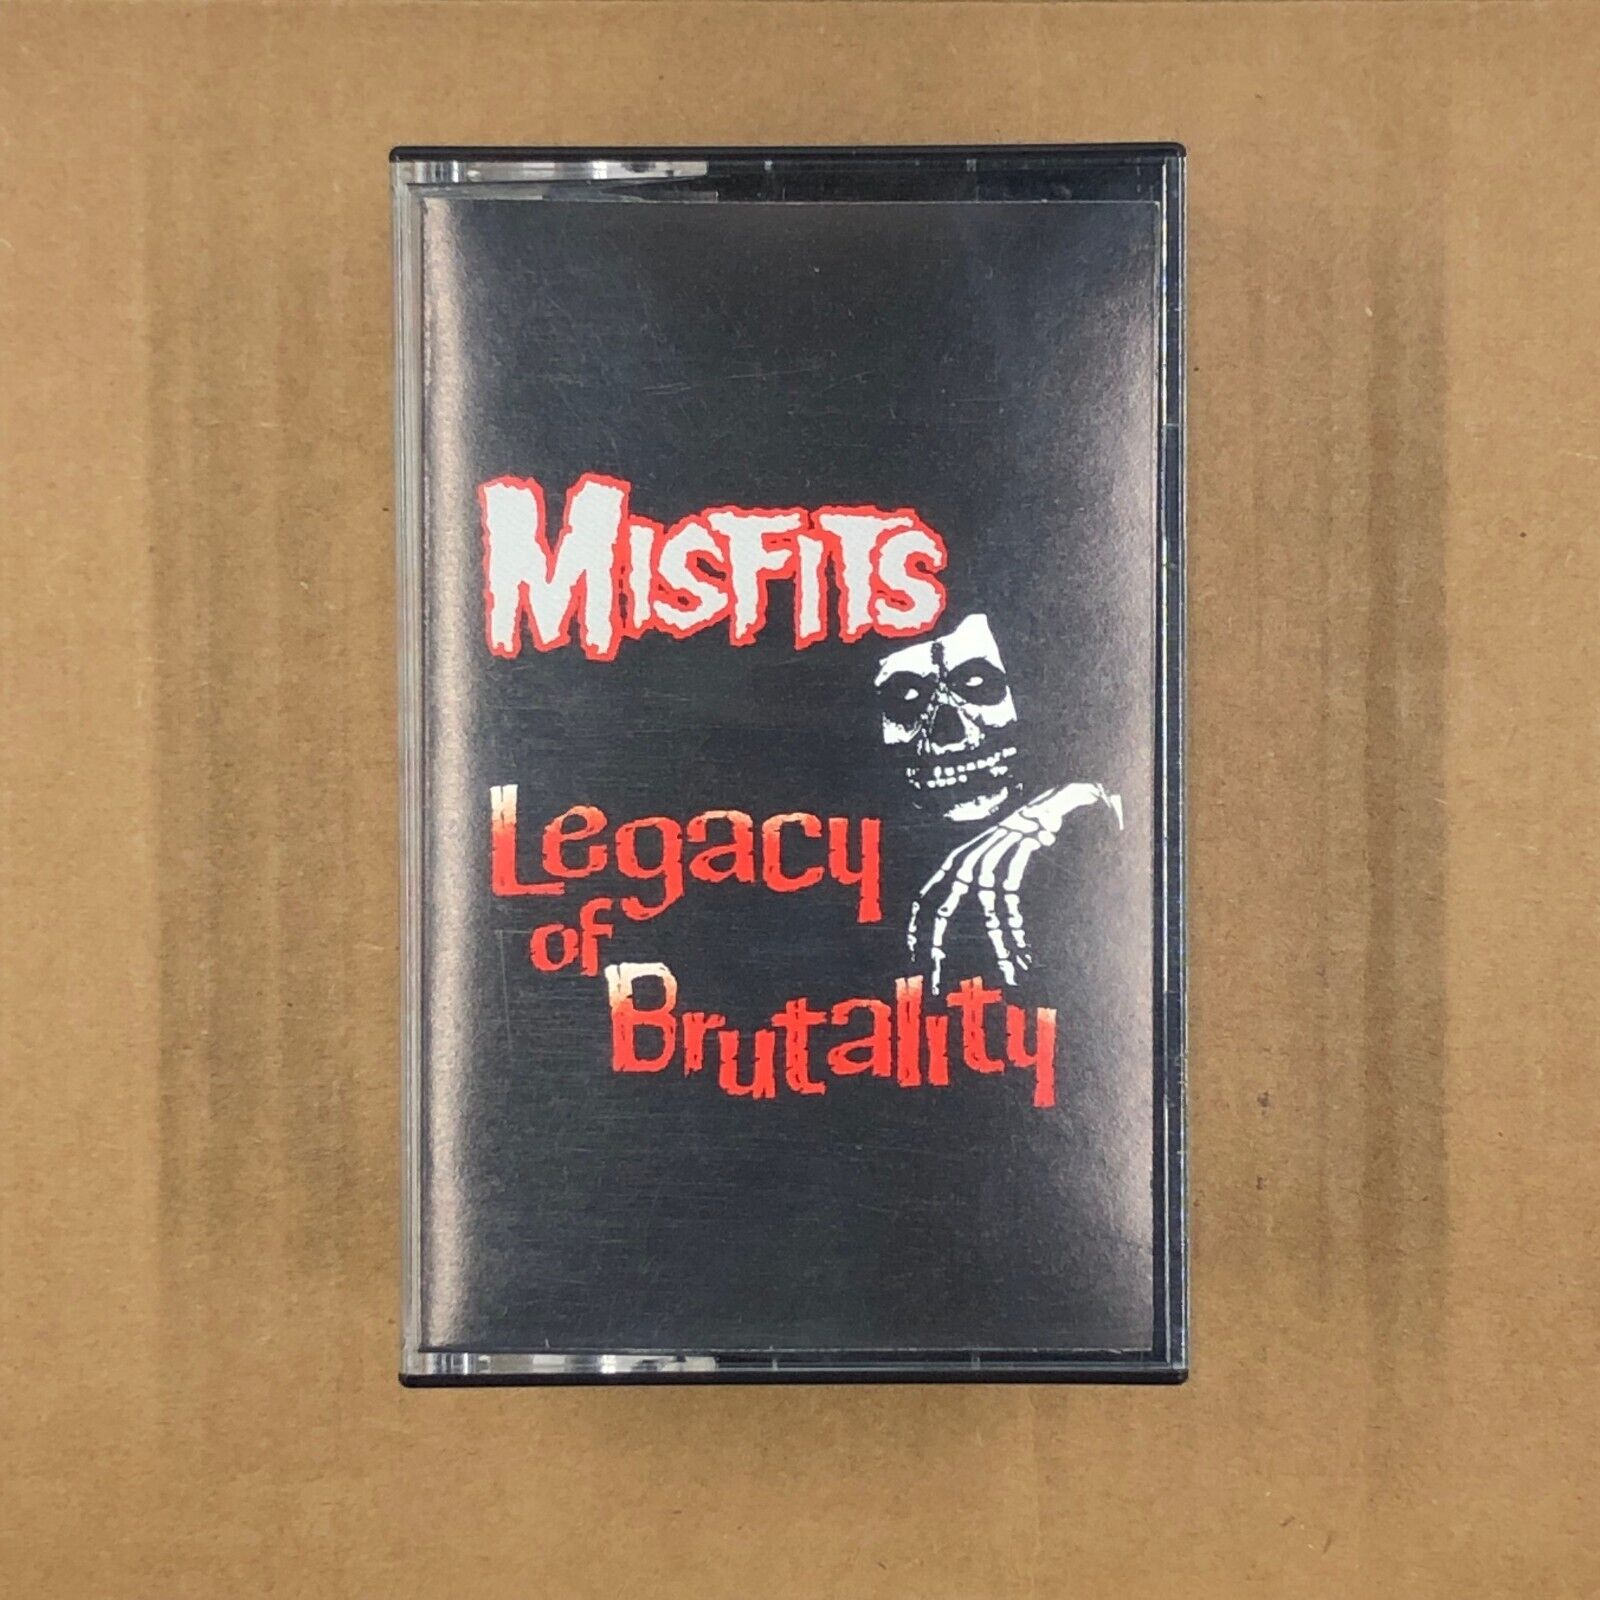 MISFITS Cassette Tape LEGACY OF BRUTALITY Rock Punk 1985 TEXTURED SHELL VTG Rare